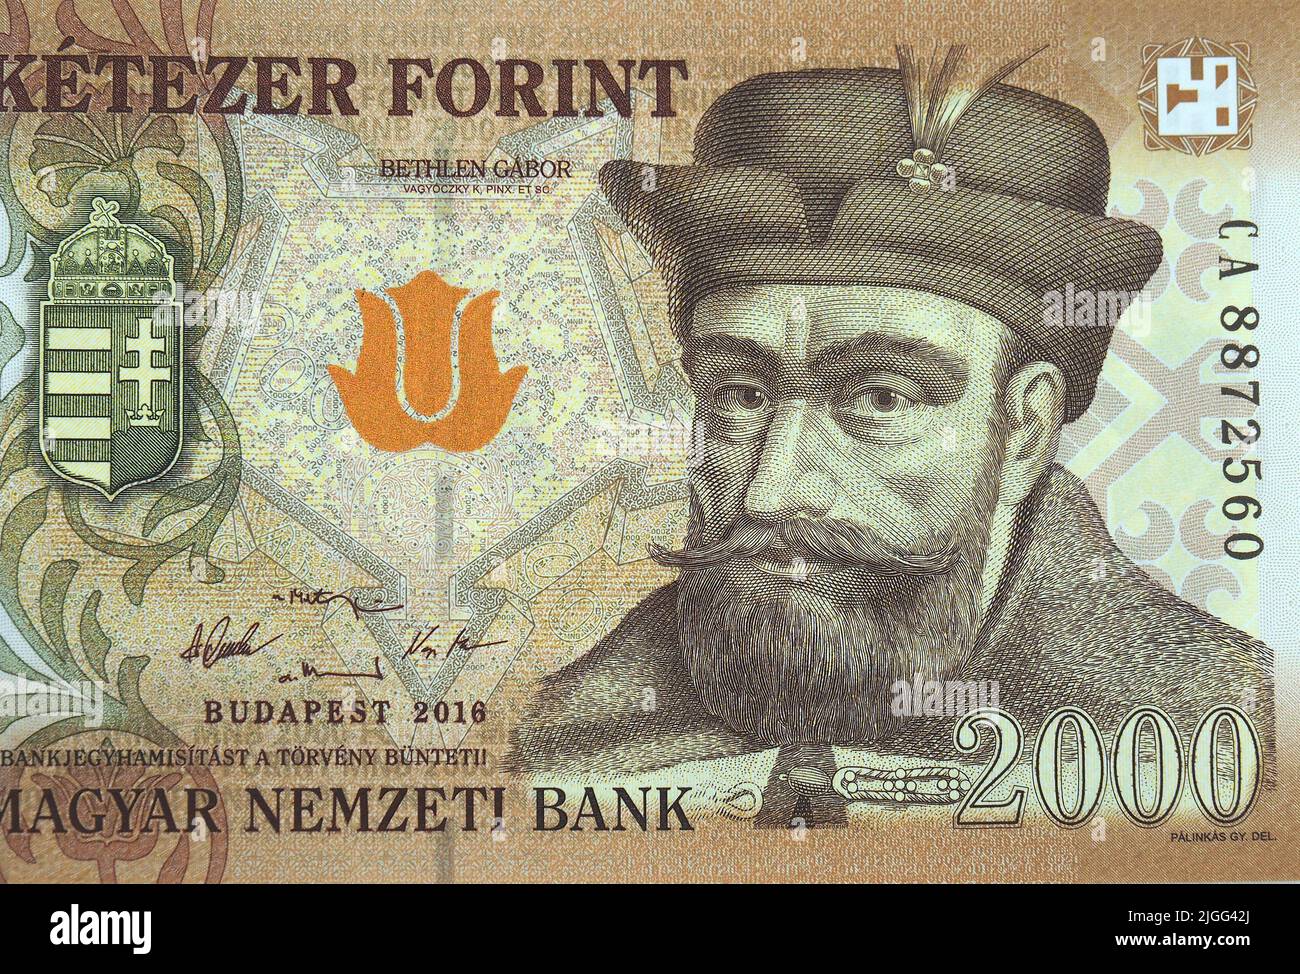 two thousand HUF banknote (1998-), hungarian forint, Prince sovereign Gábor Bethlen, Hungary, Magyarország, Europe Stock Photo